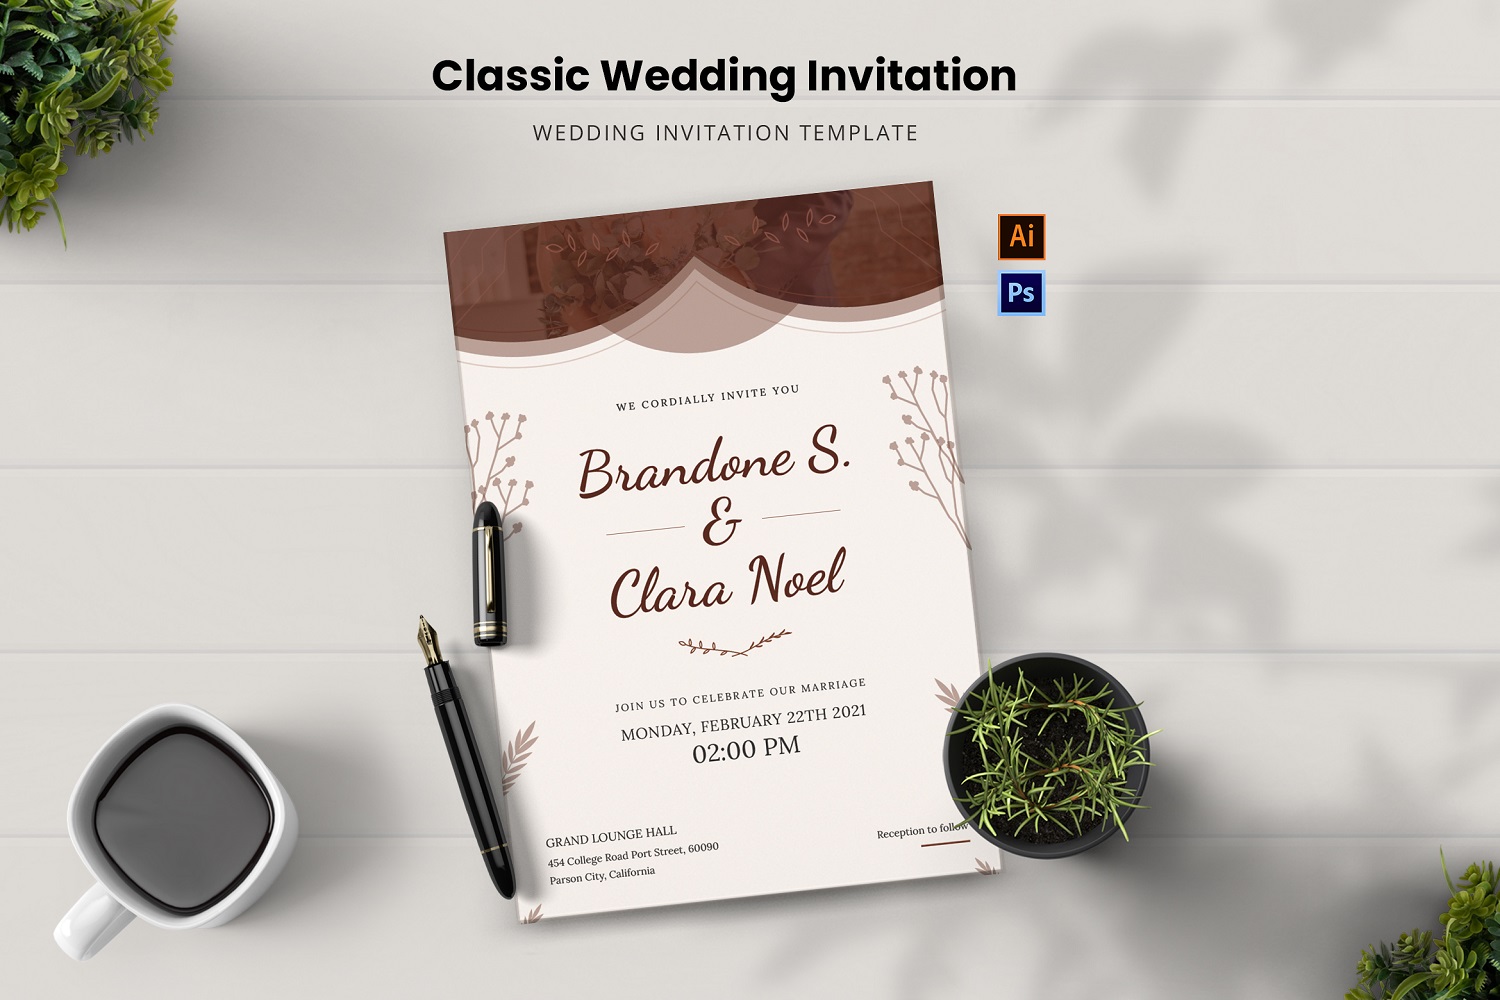 Classic Wedding Invitation Corporate identity template